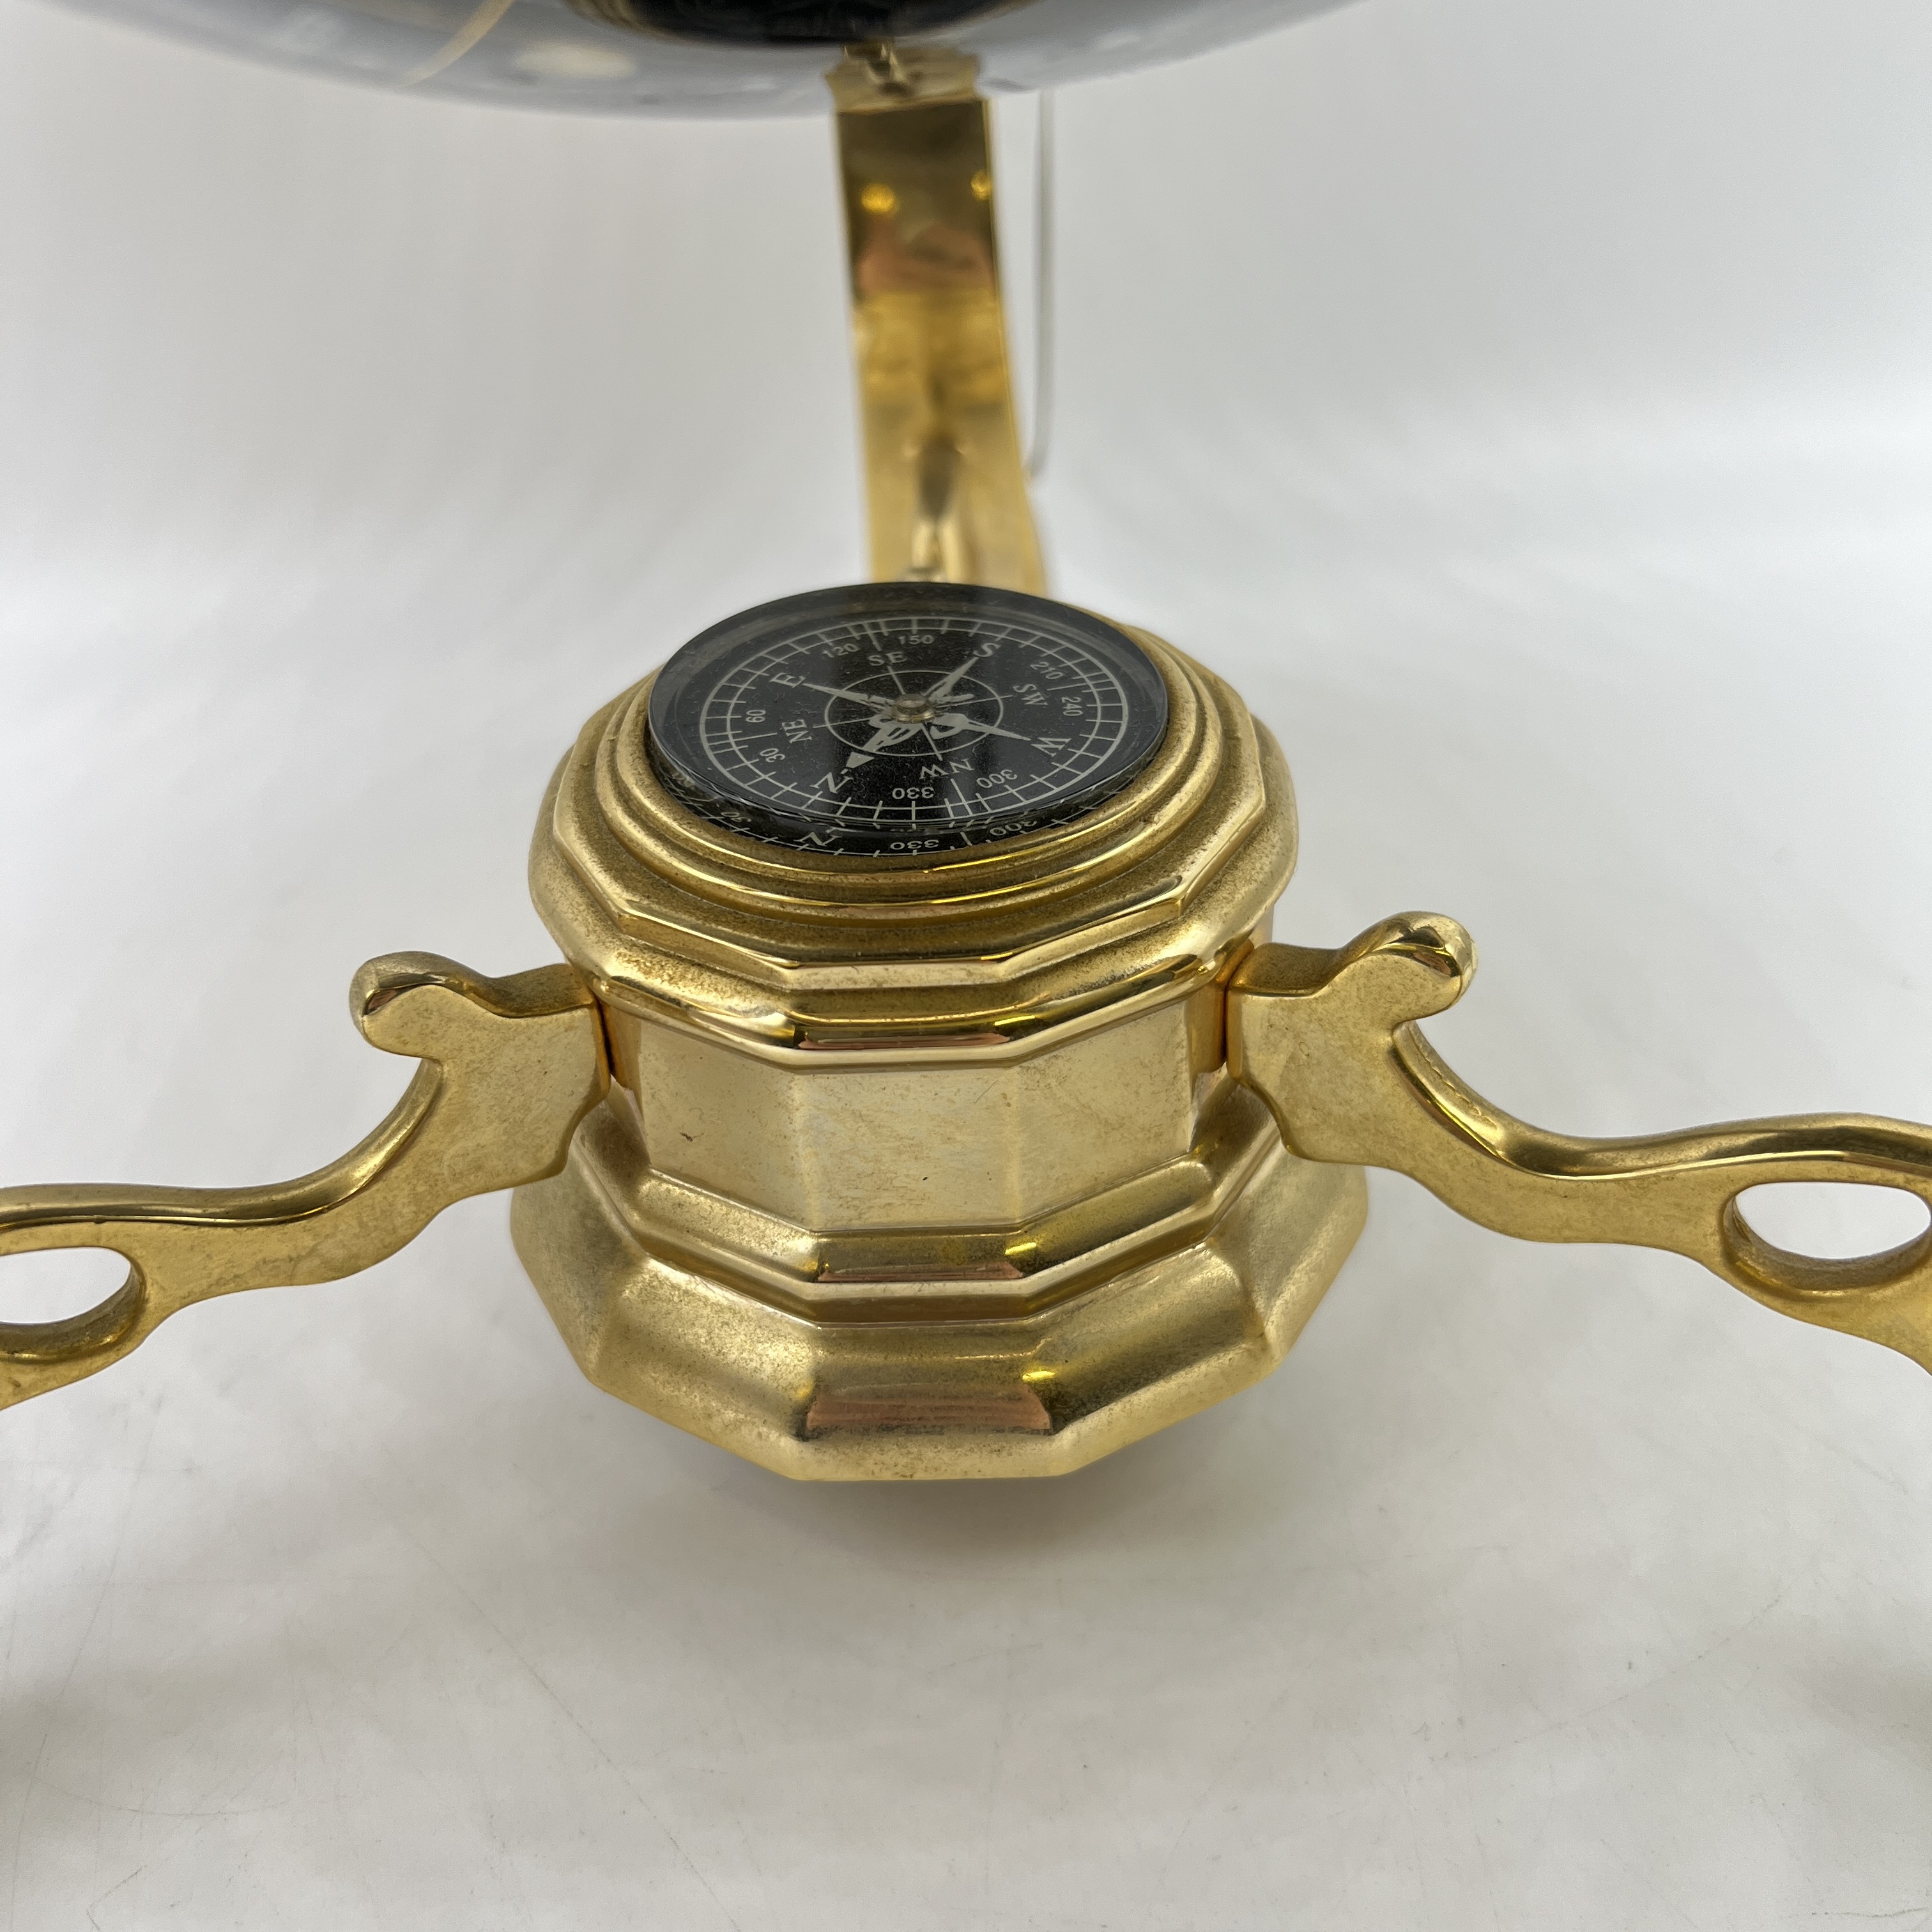 An ornamental globe of the constillation stars - Image 3 of 4